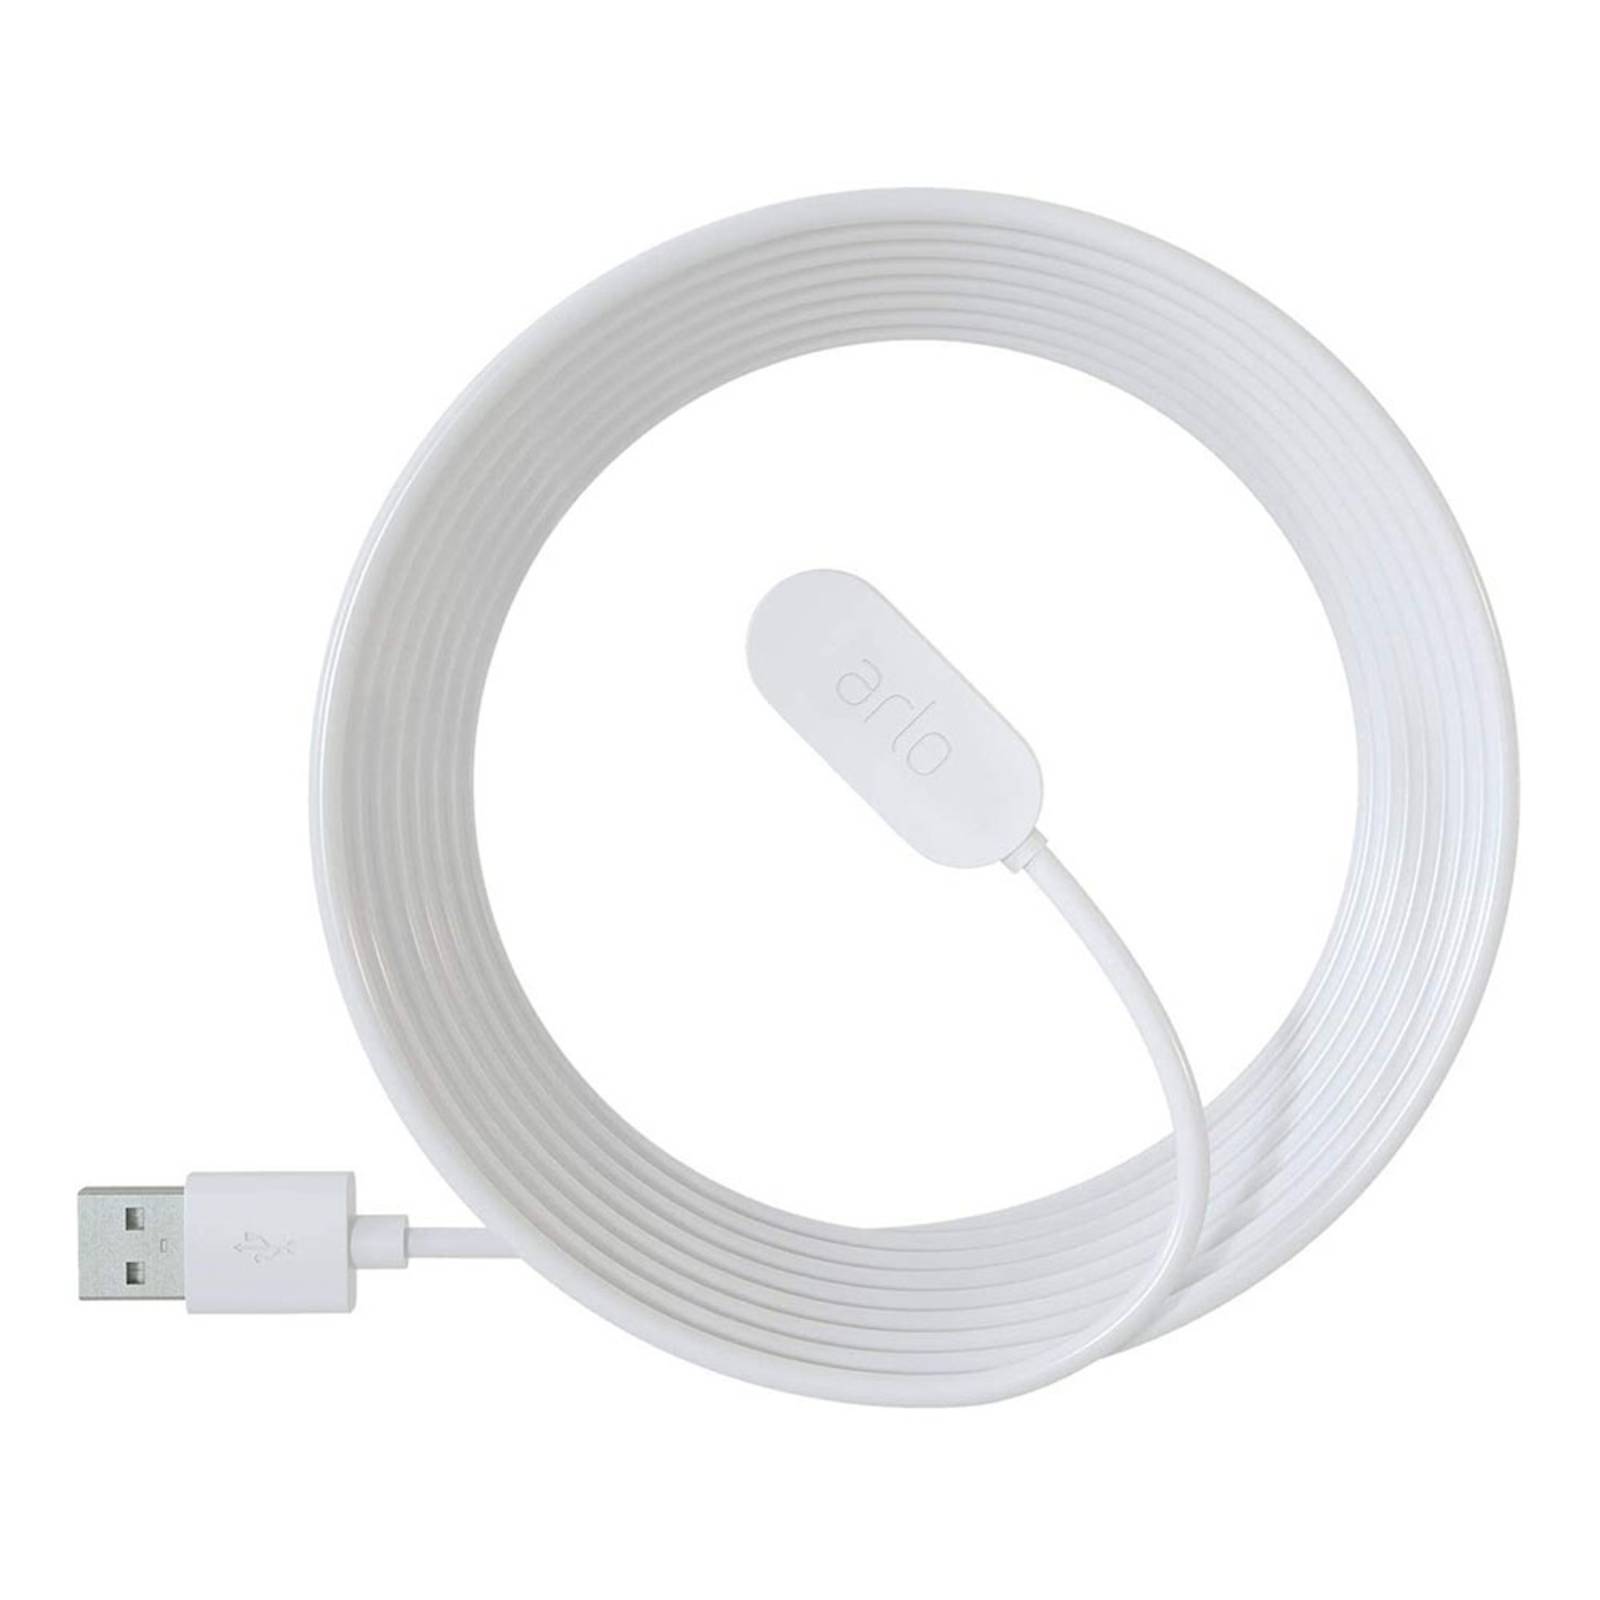 Image of Arlo câble pour caméra, intérieur, blanc 